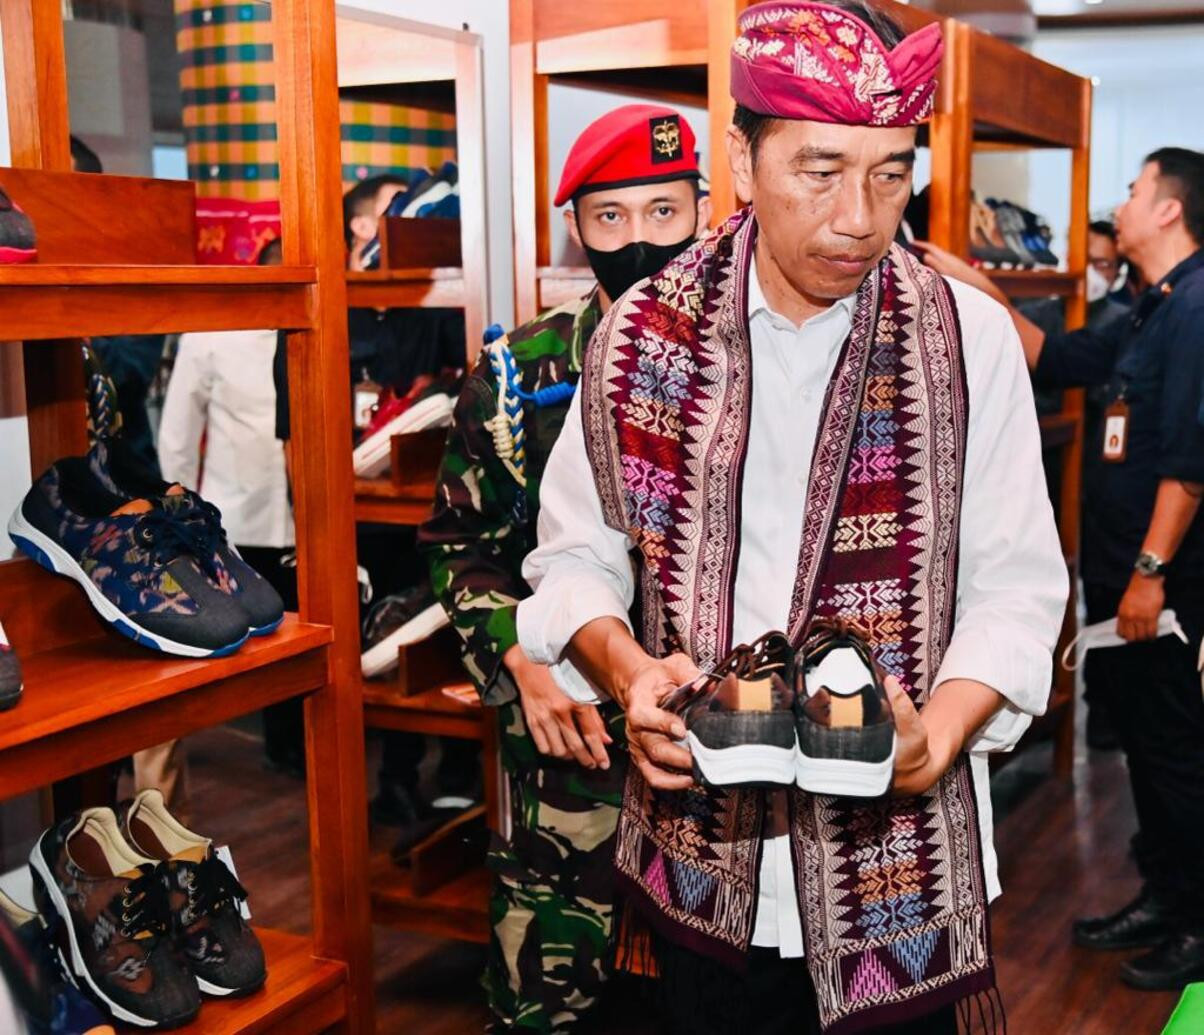 Kala Jokowi Beli Sepatu Khas Tenun Bali, Basuki pun Terpancing - JPNN.com